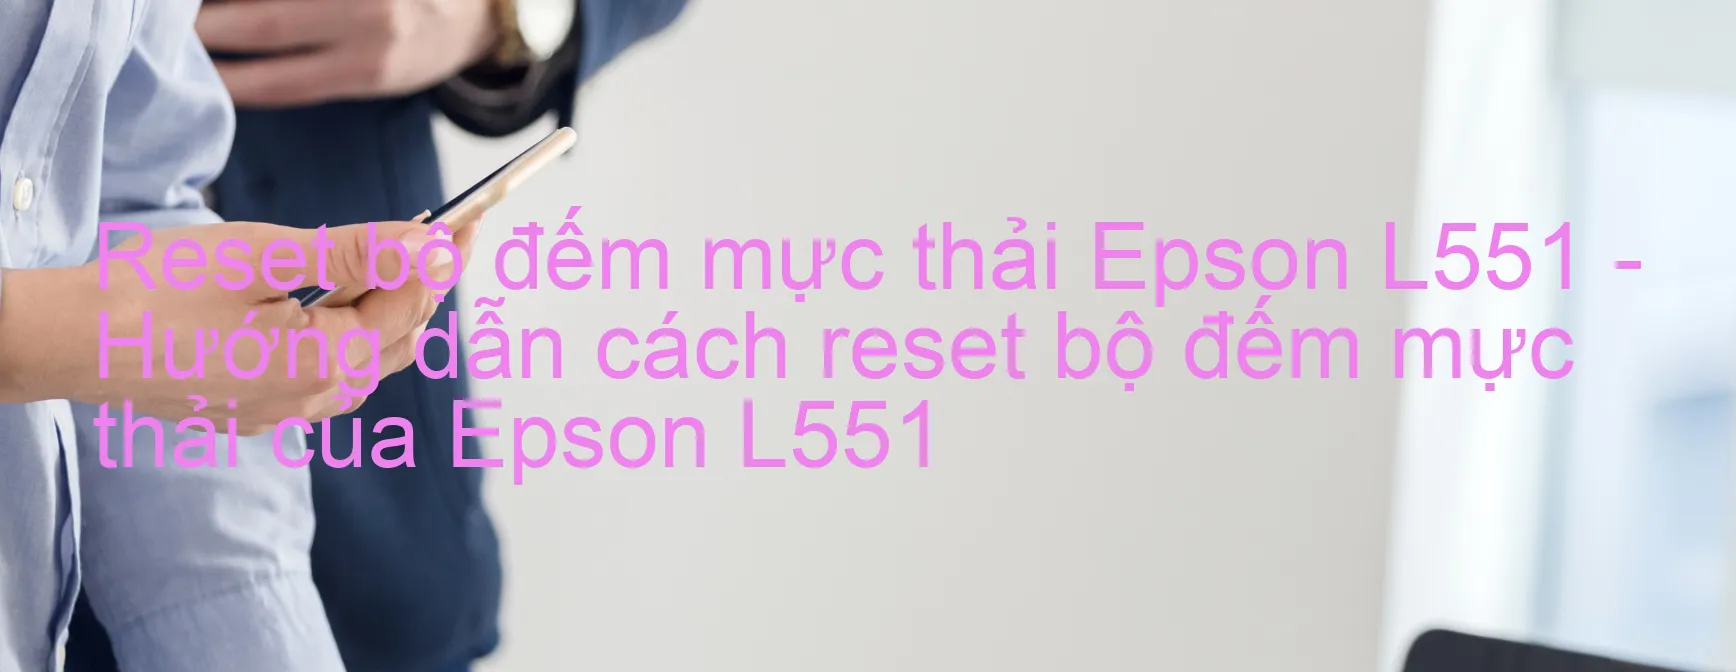 Reset bộ đếm mực thải Epson L551 - Hướng dẫn cách reset bộ đếm mực thải của Epson L551